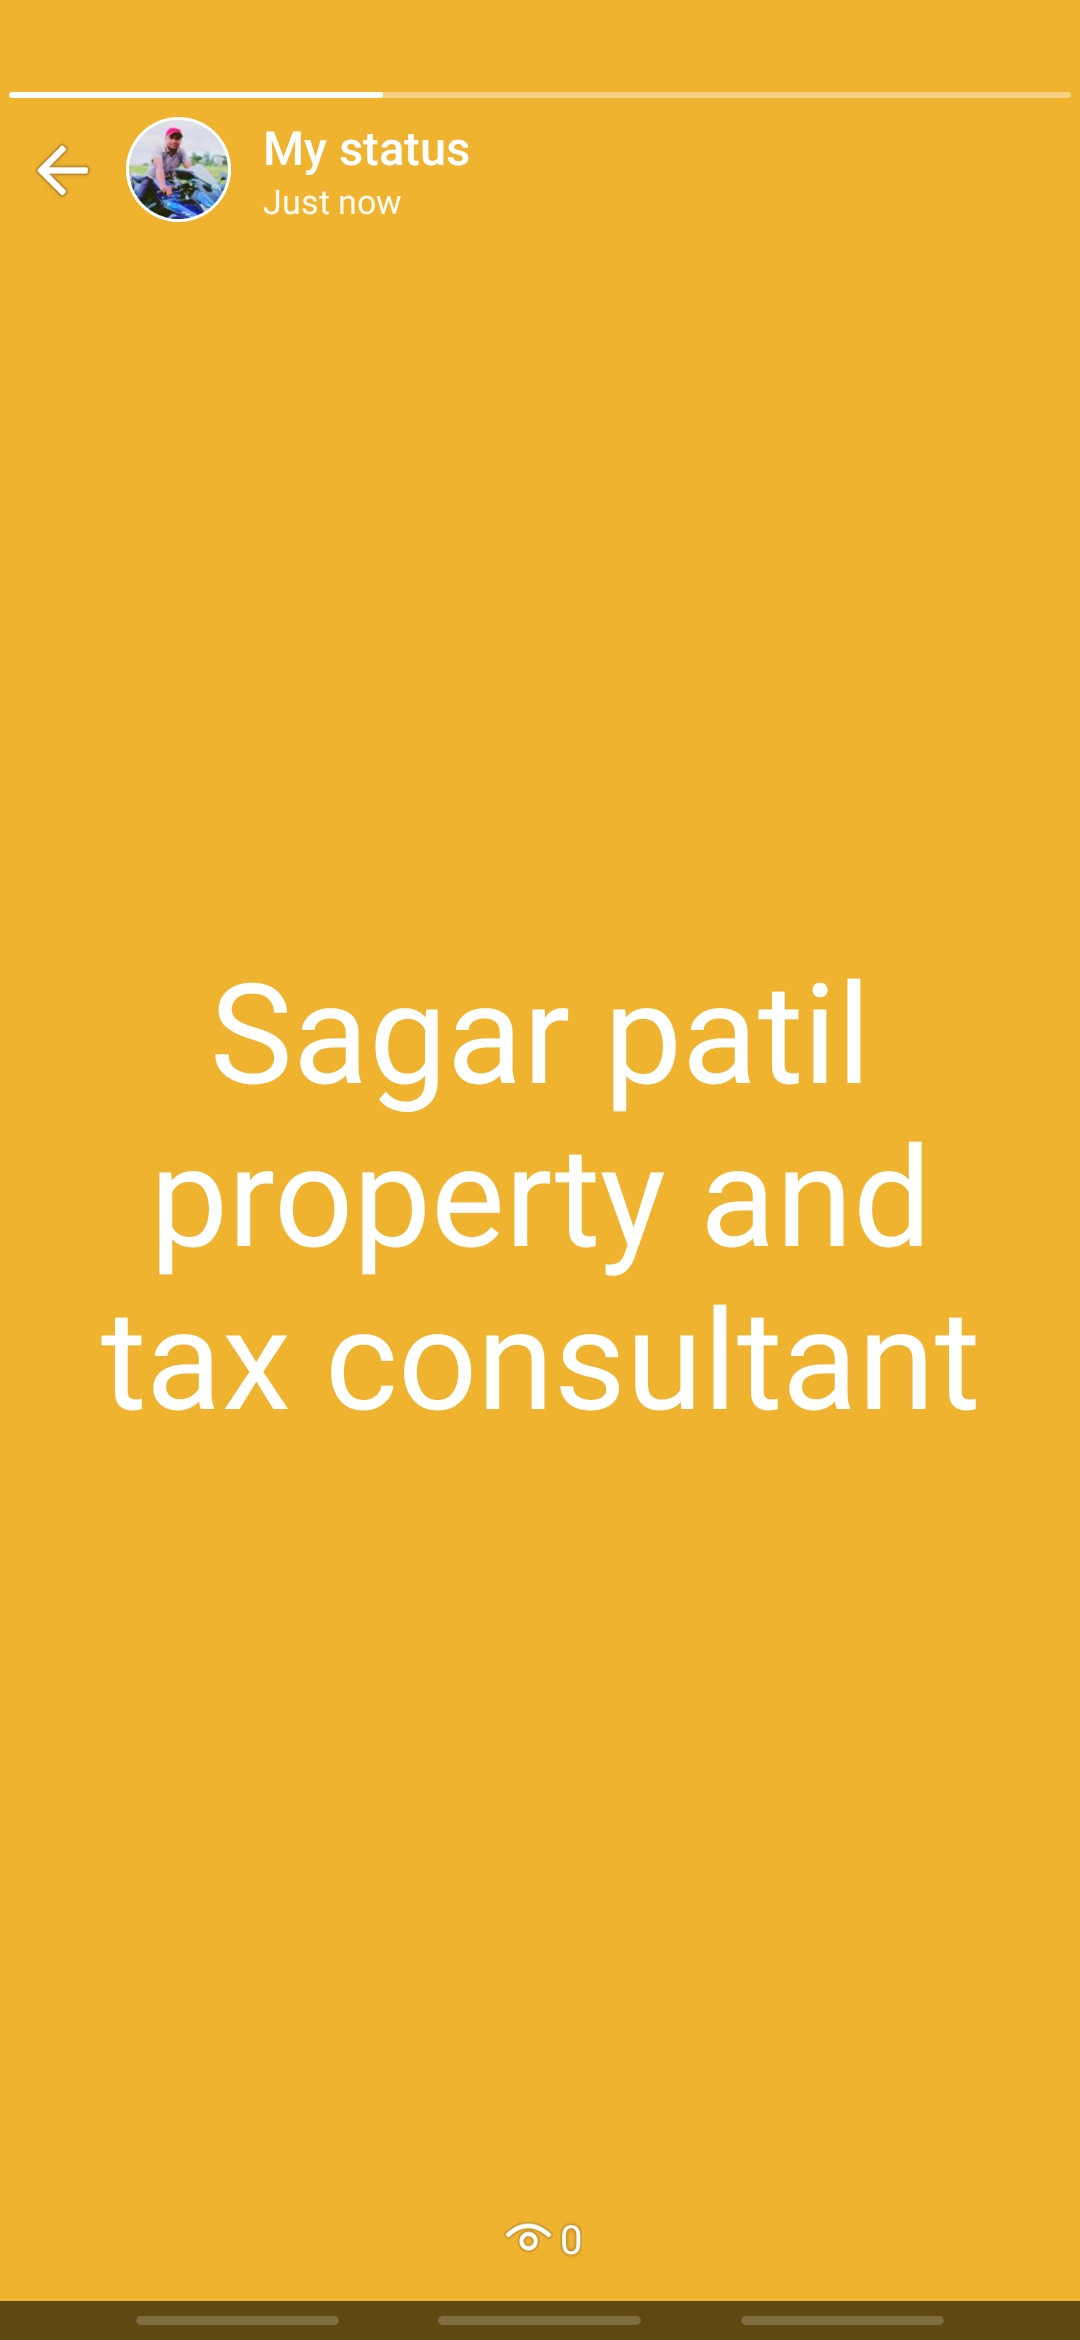 Sagar patil e seva property and tax consultancy